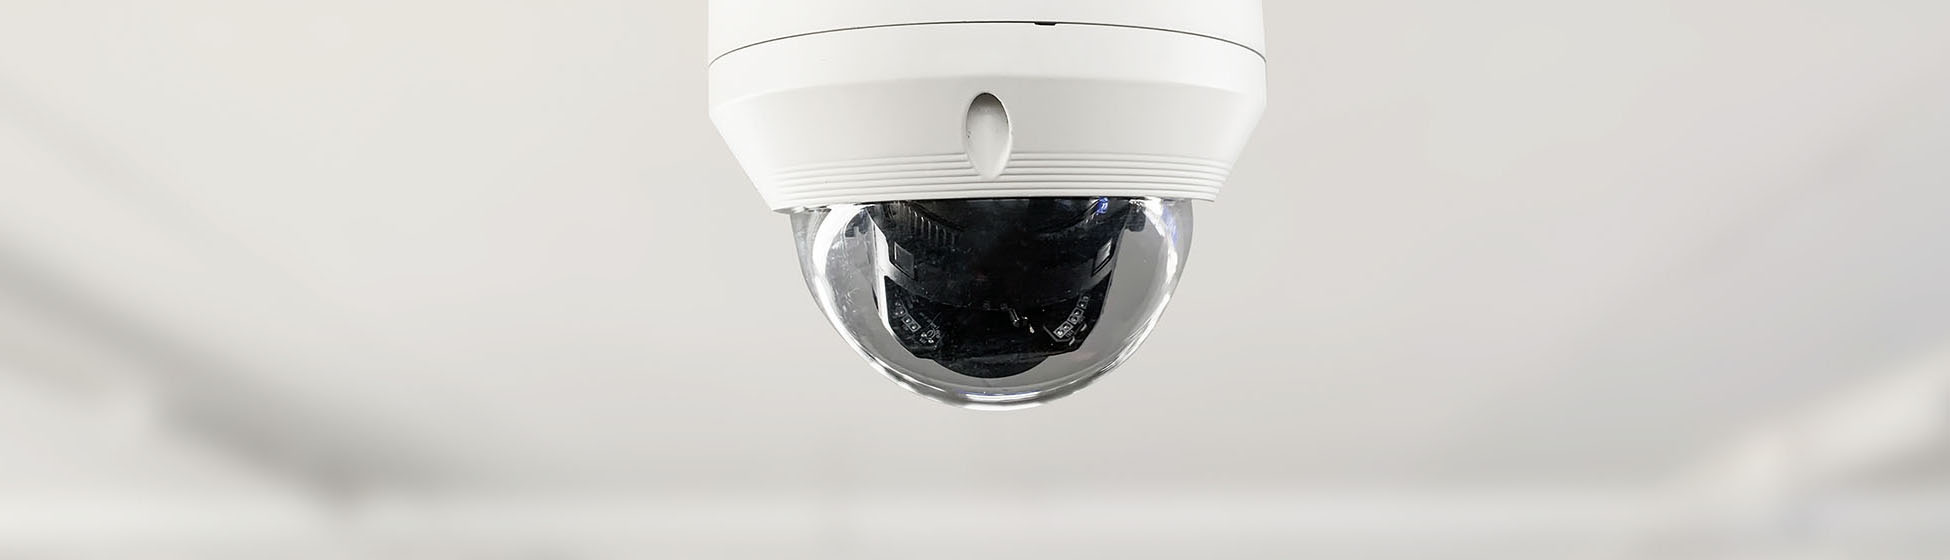 Installation alarme et videosurveillance